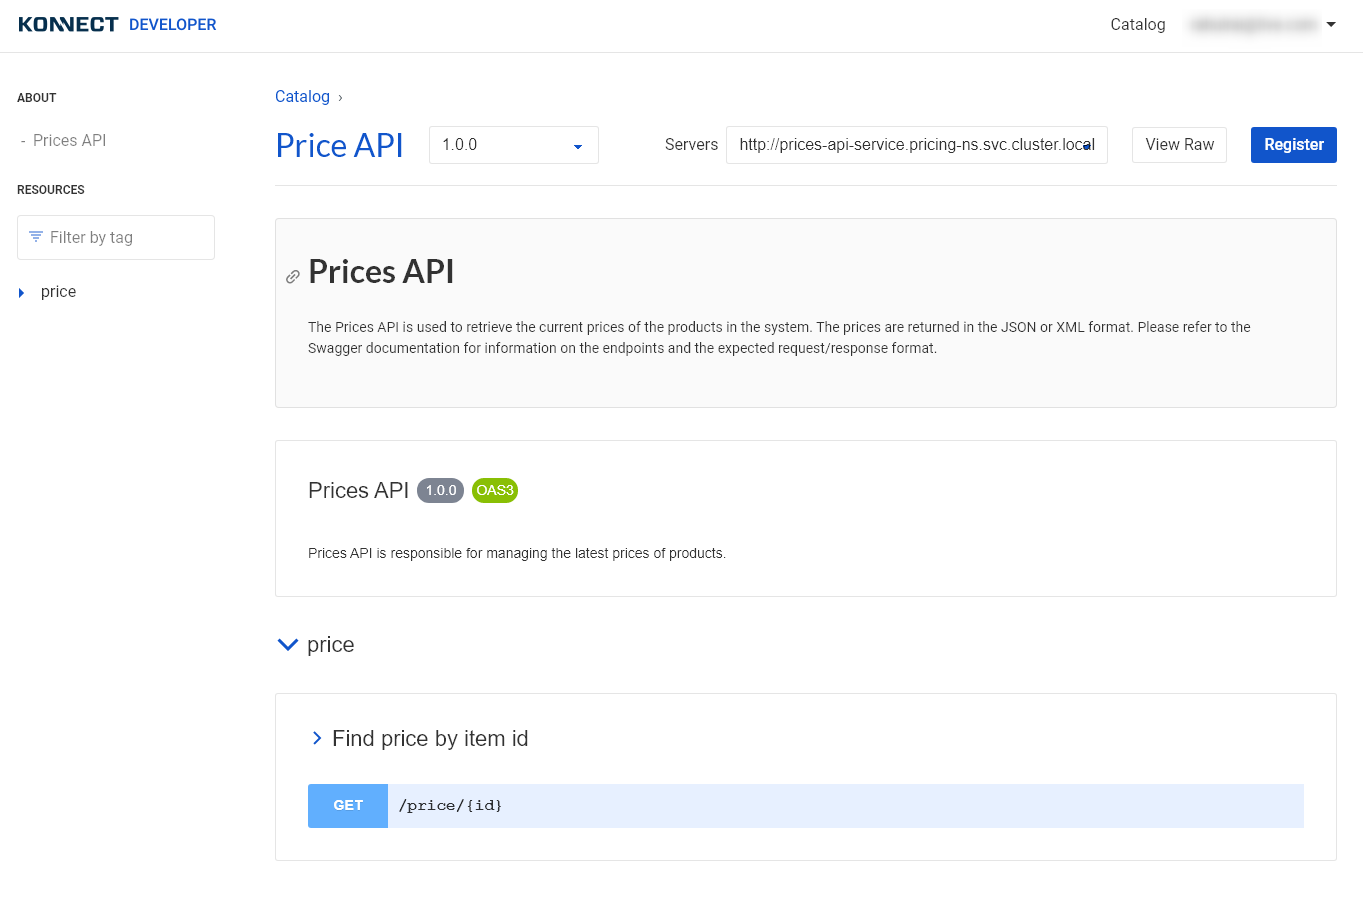 Prices API specification